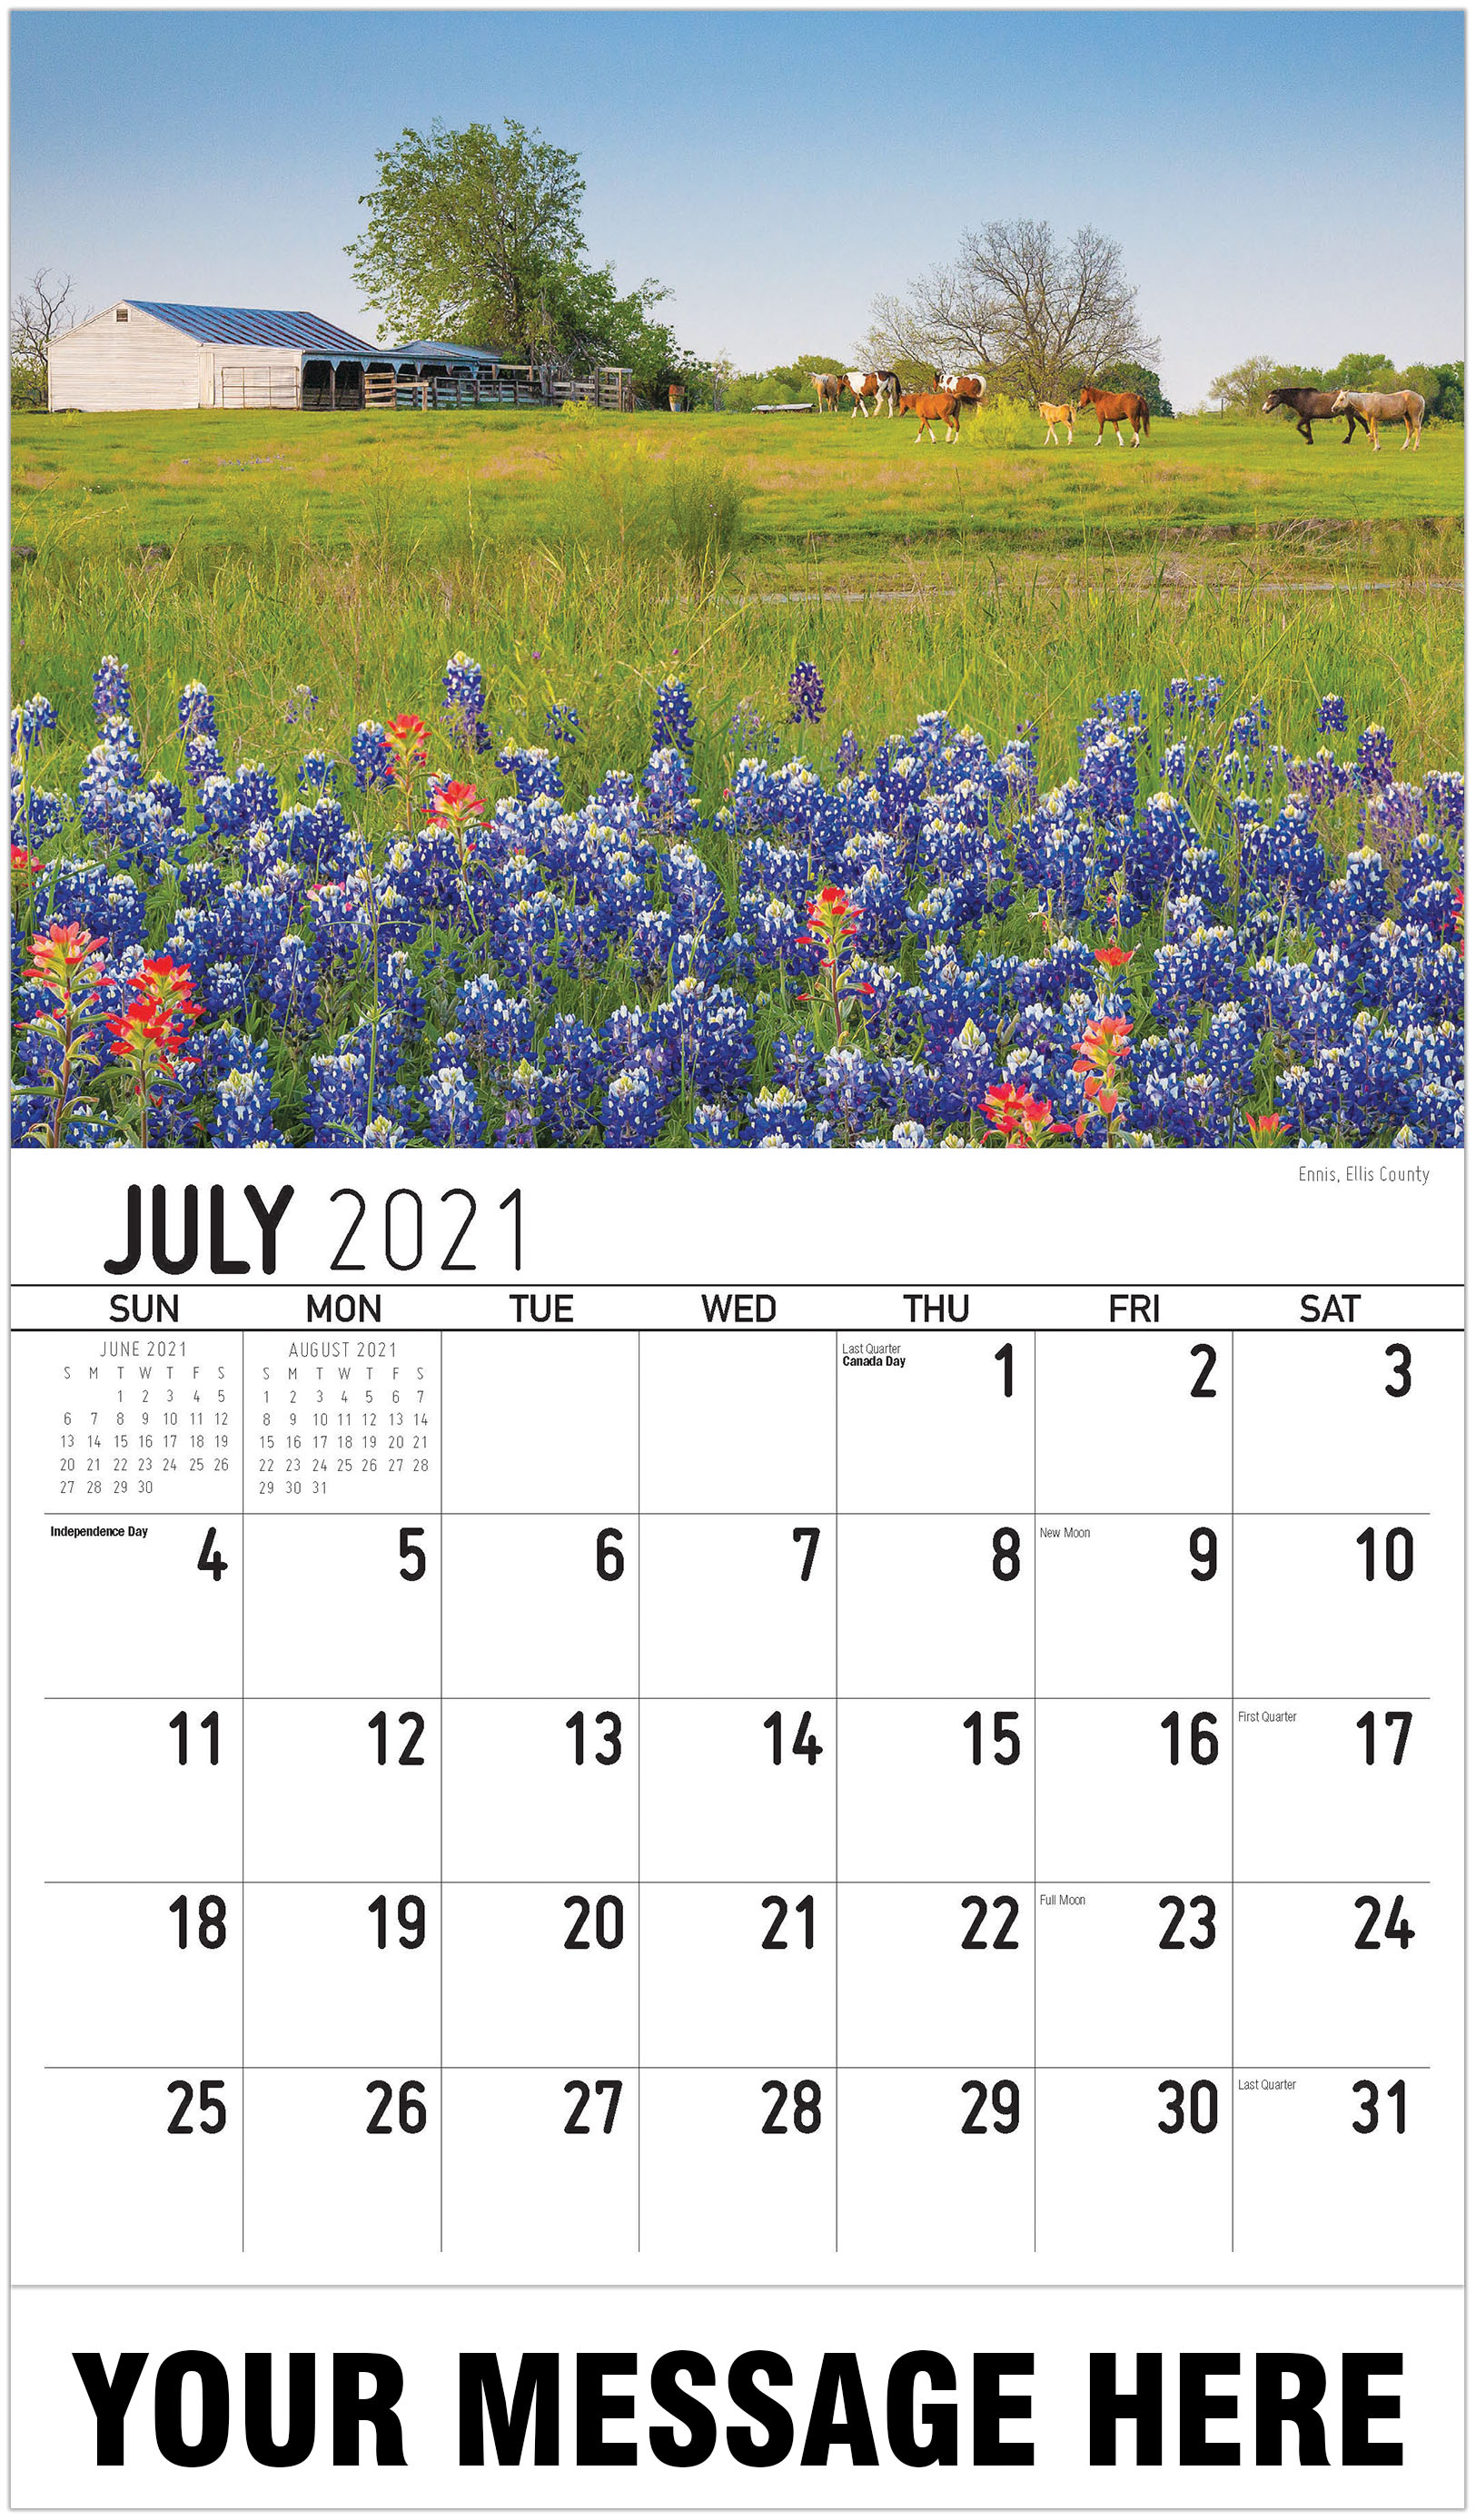 2021 Scenes of Texas Calendar | Texas State Promotional Wall Calendar